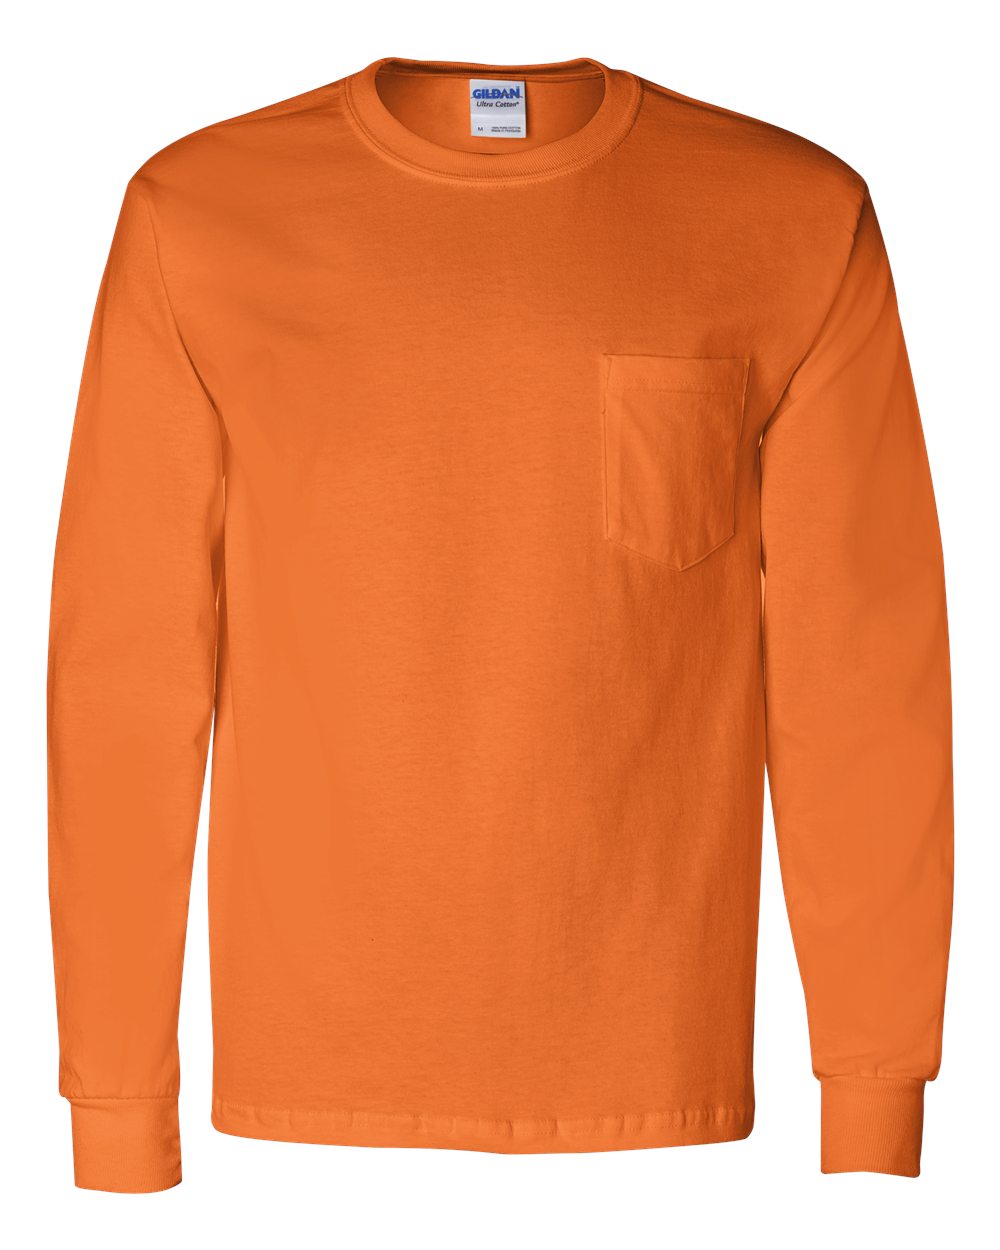 Pretreated Gildan 2410 Ultra Cotton Long Sleeve Pocket T-Shirt